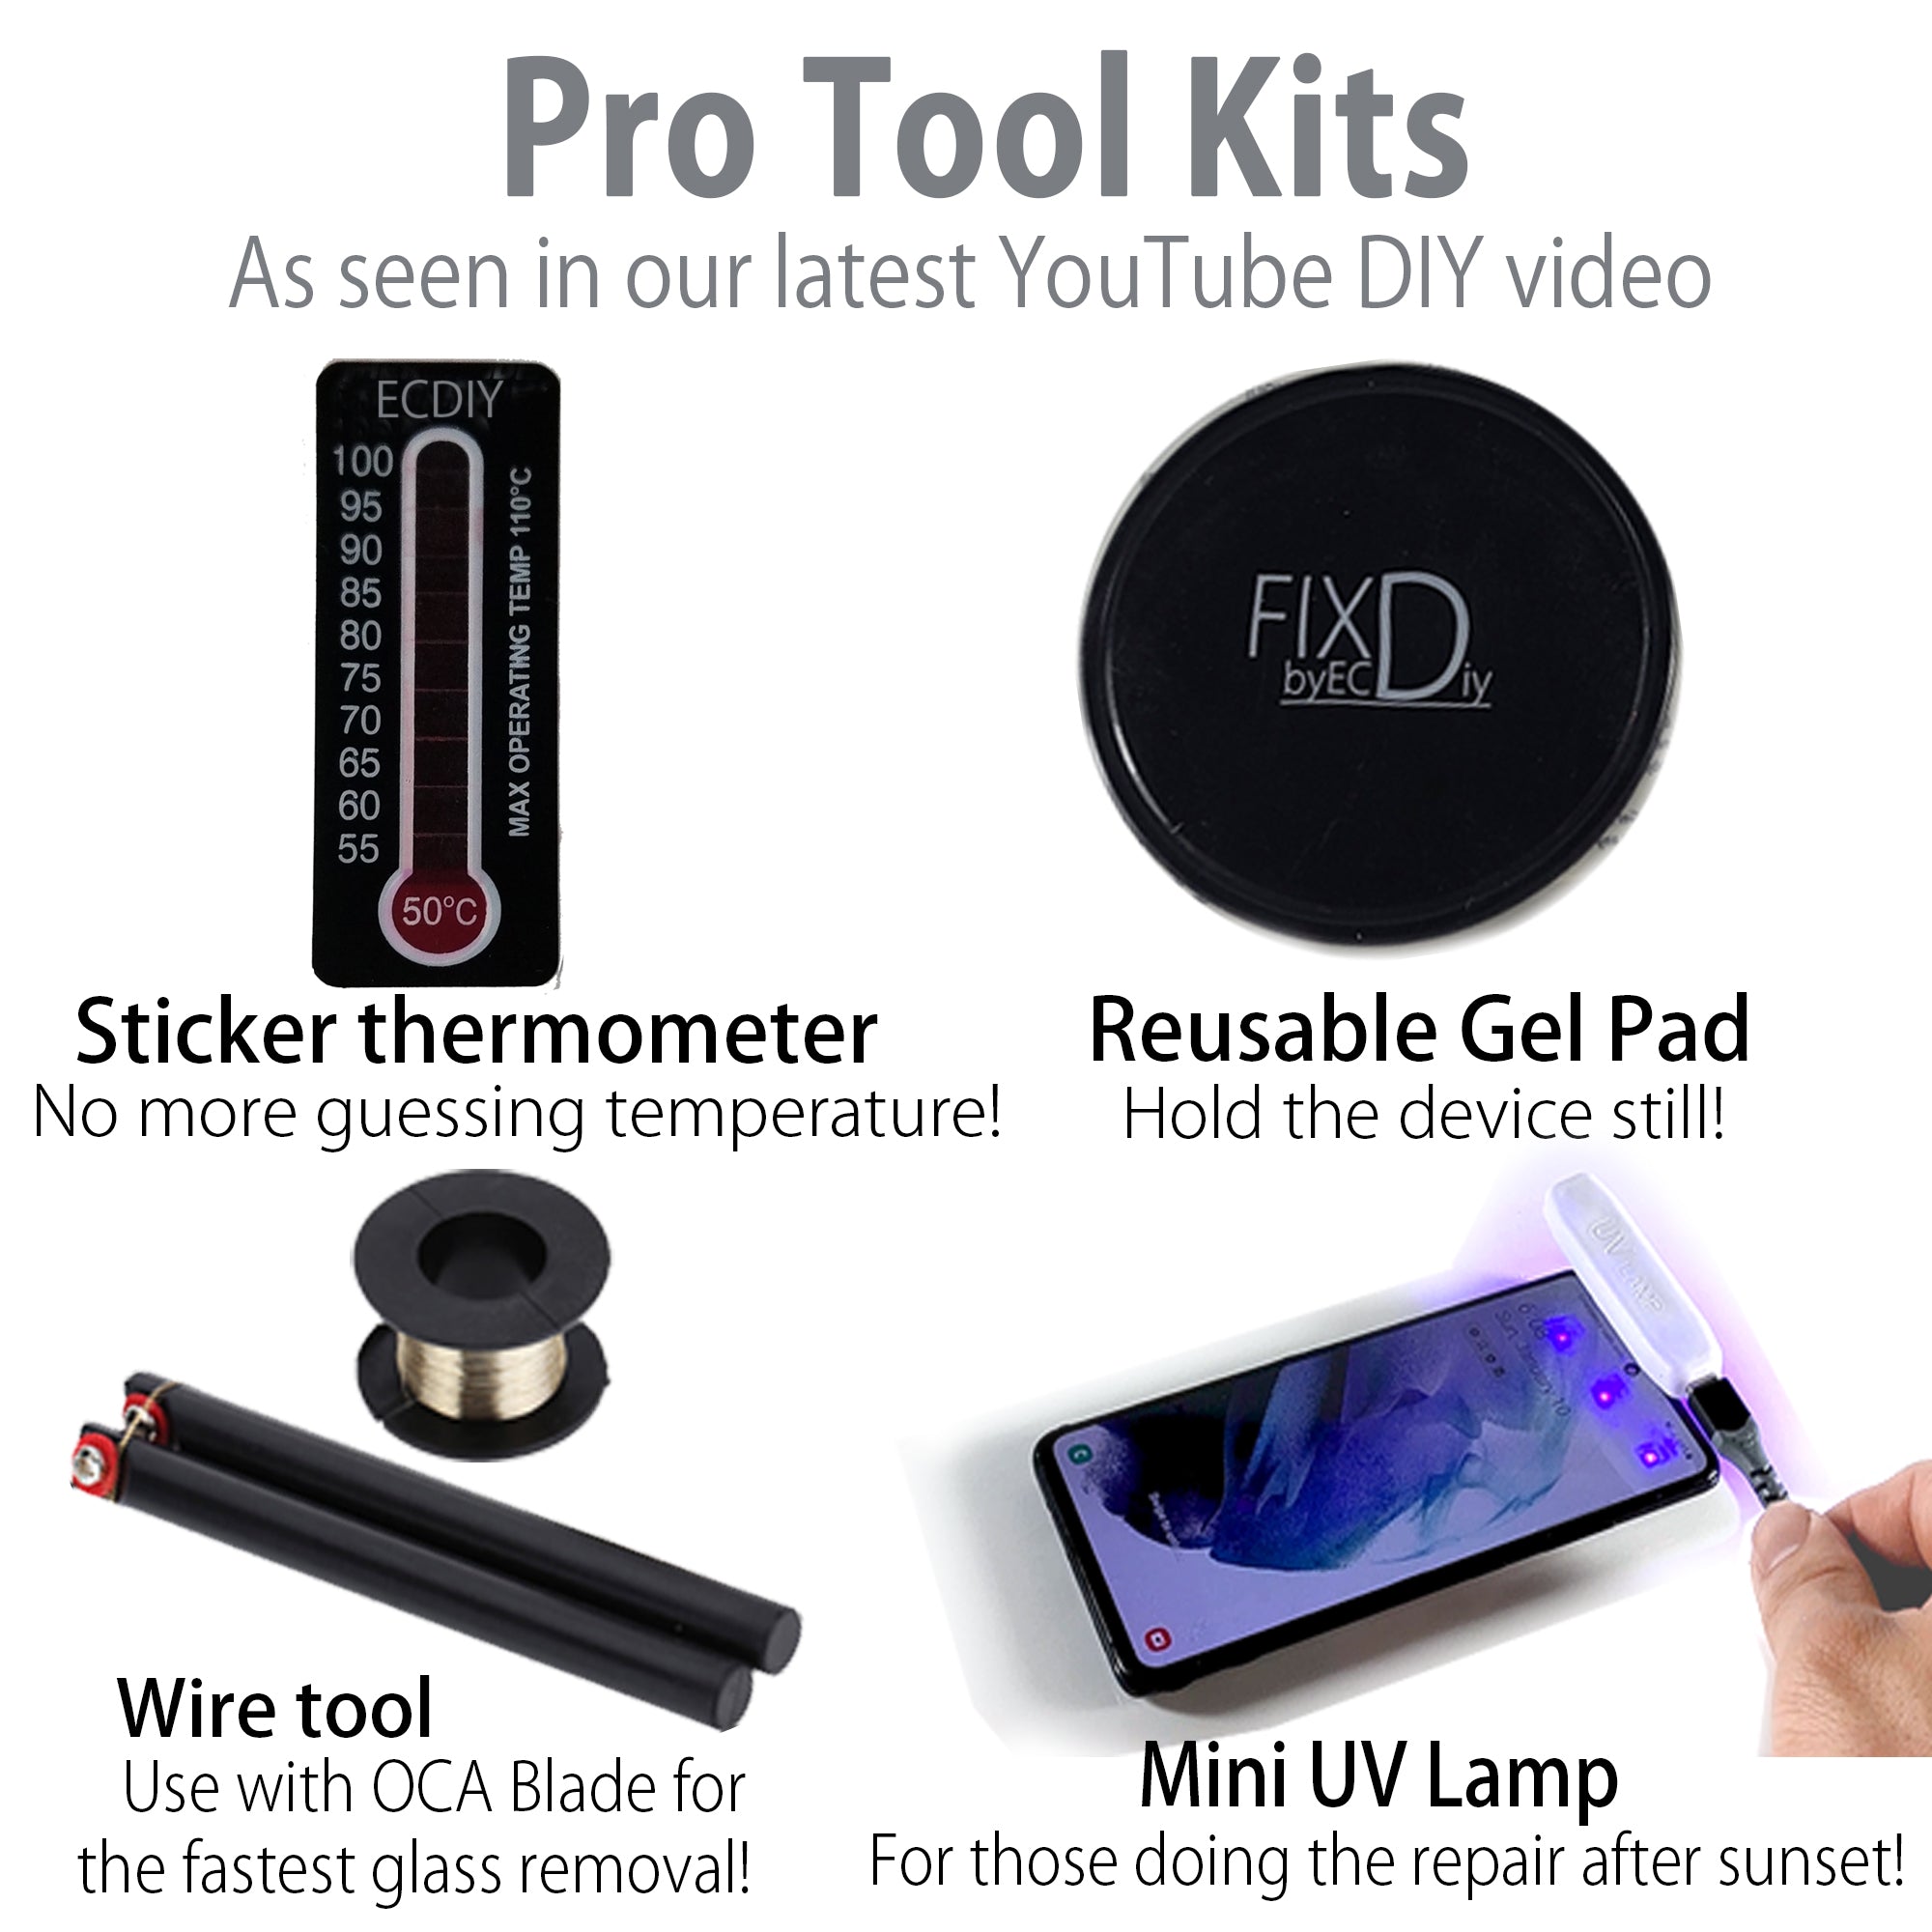 Pro Tool Kits